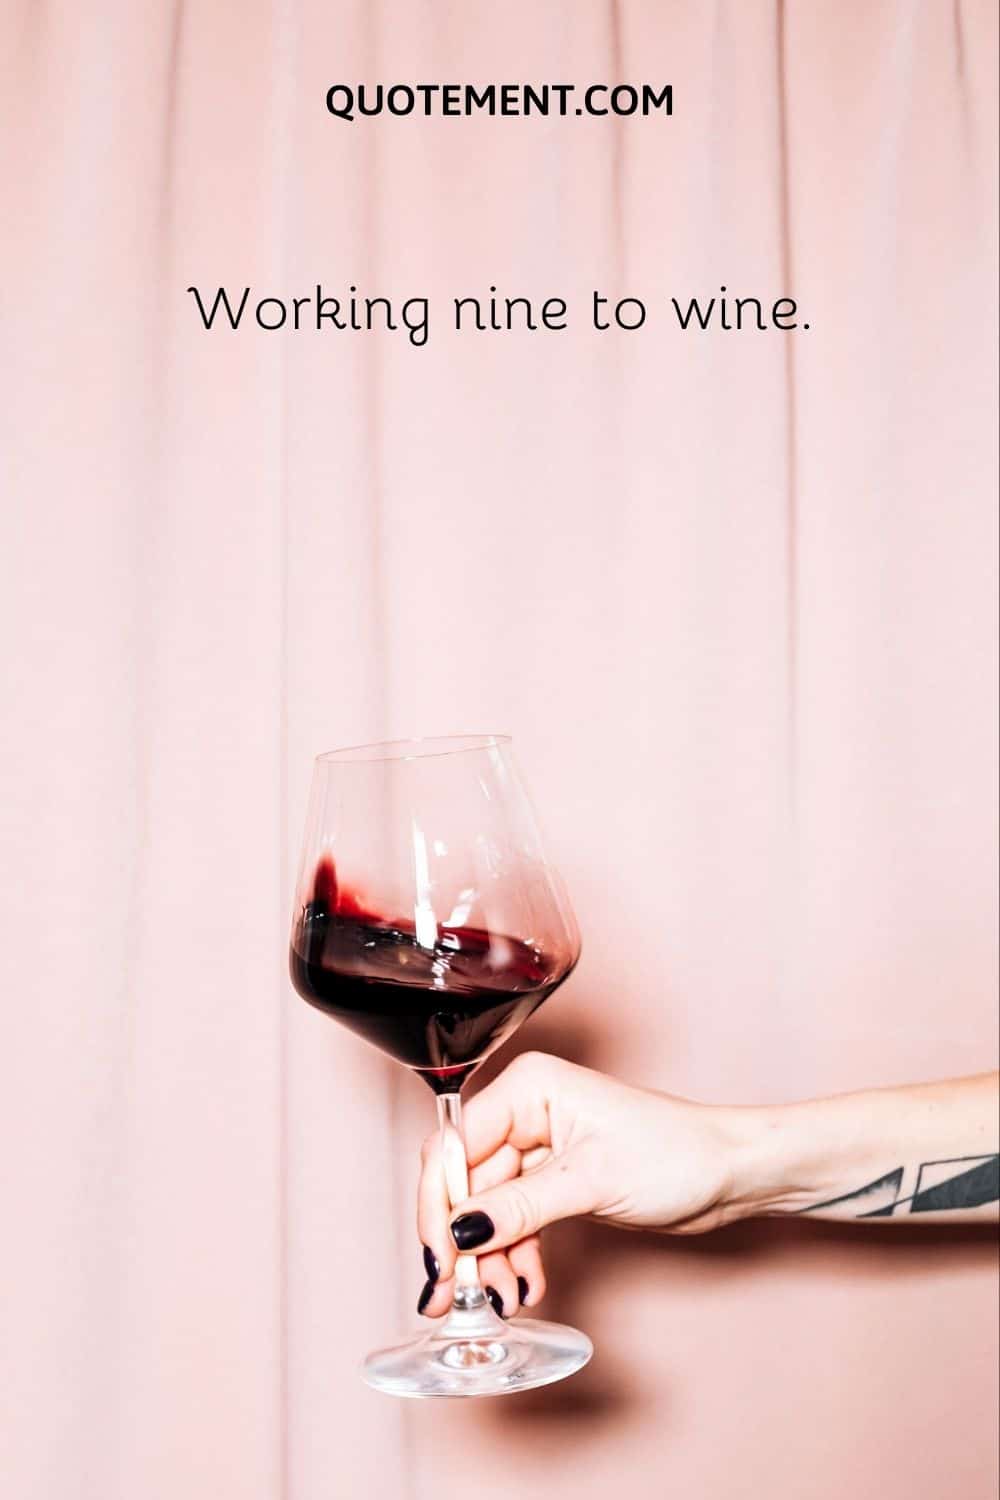 Working nine to wine